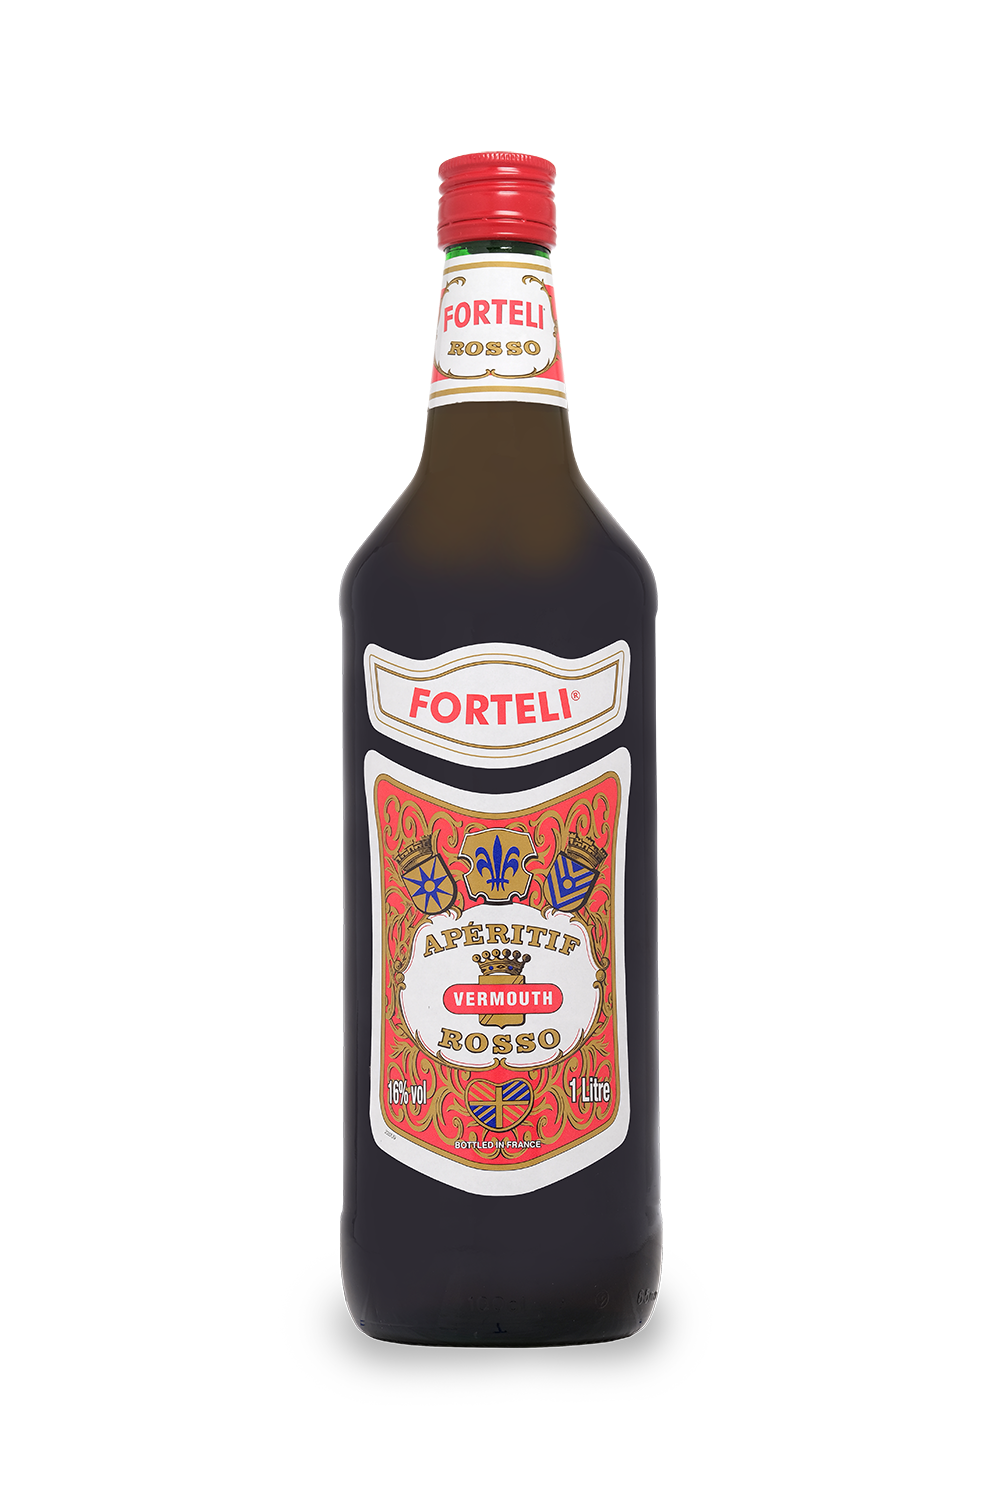 Vermouth Rosso Forteli 100 16 0Z7G Web (1)